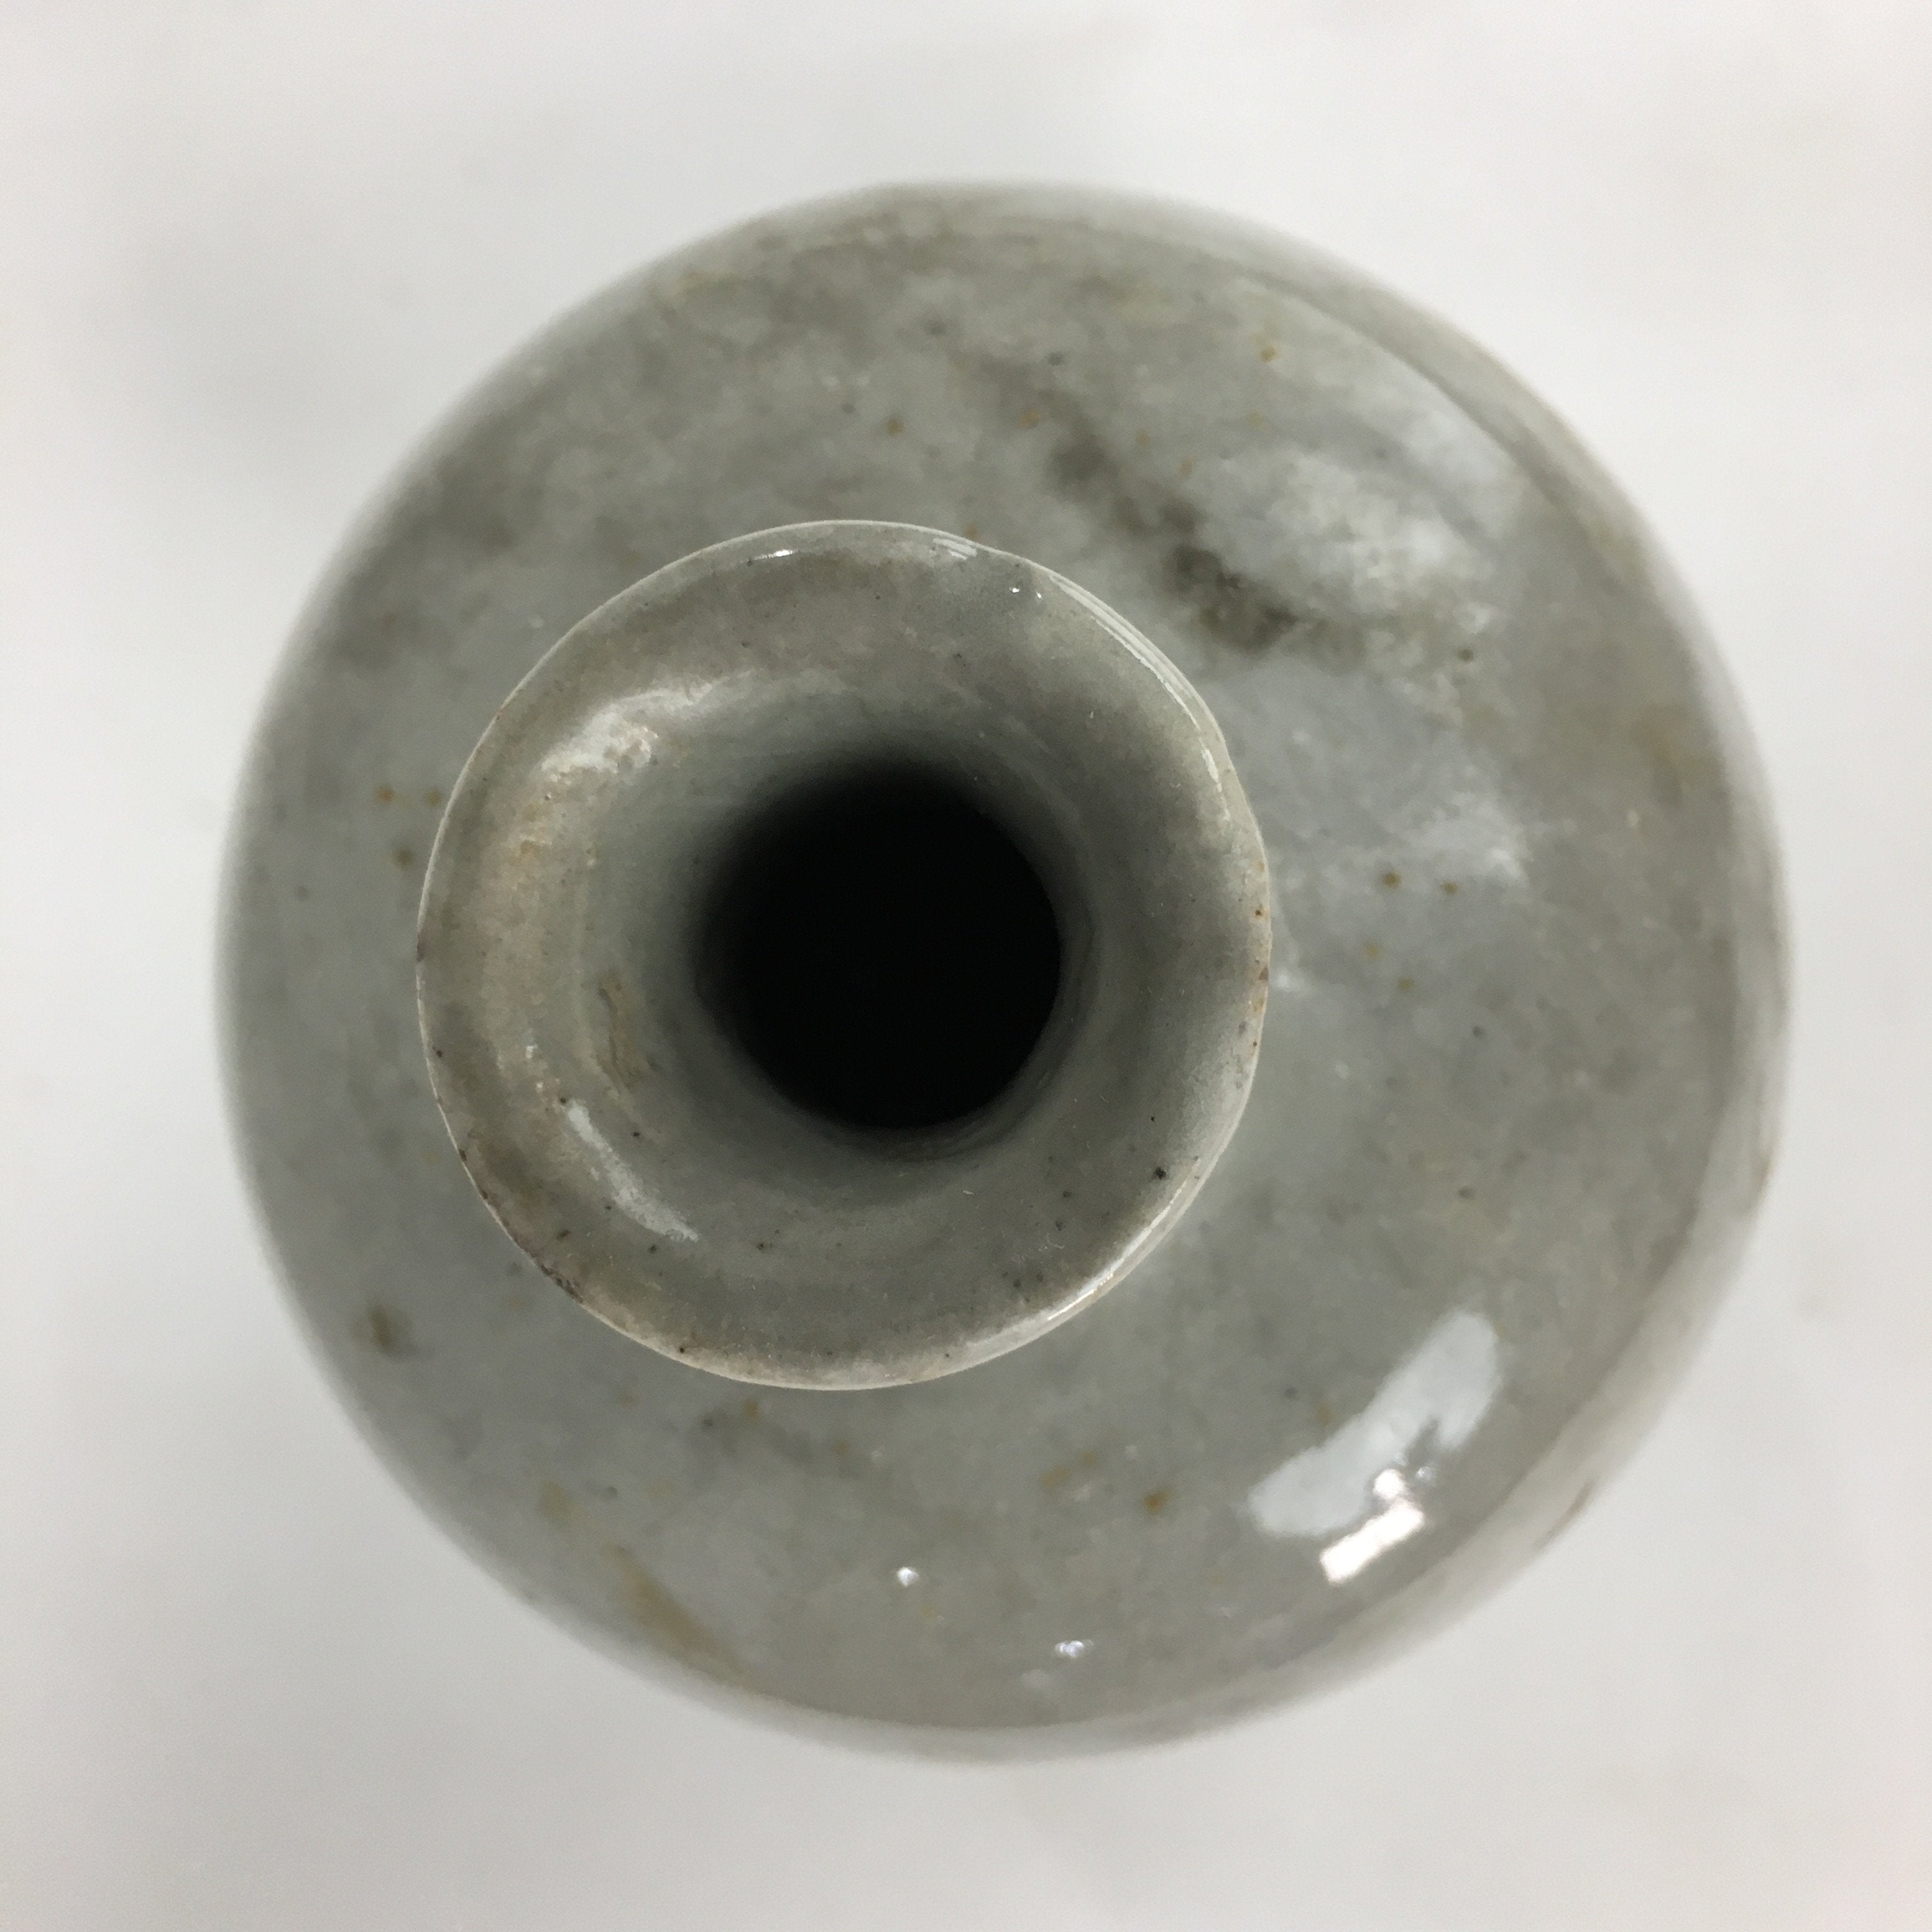 Japanese Ceramic Sake Bottle Vtg Kayoi Tokkuri Non-writing Gray Pottery TS300